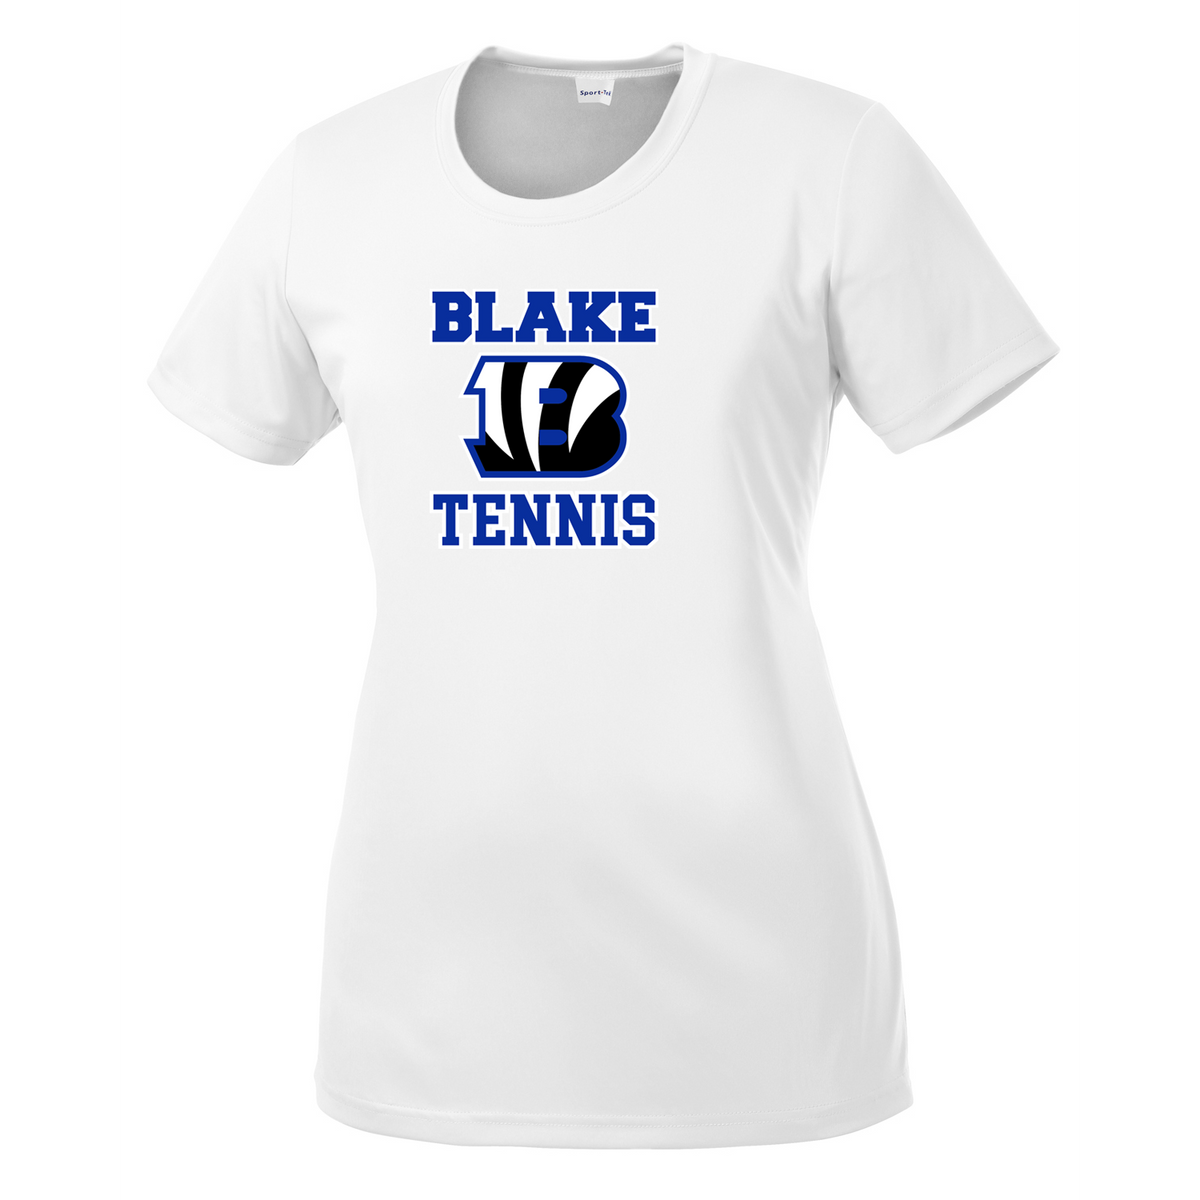 Blake Tennis Women's Performance Tee